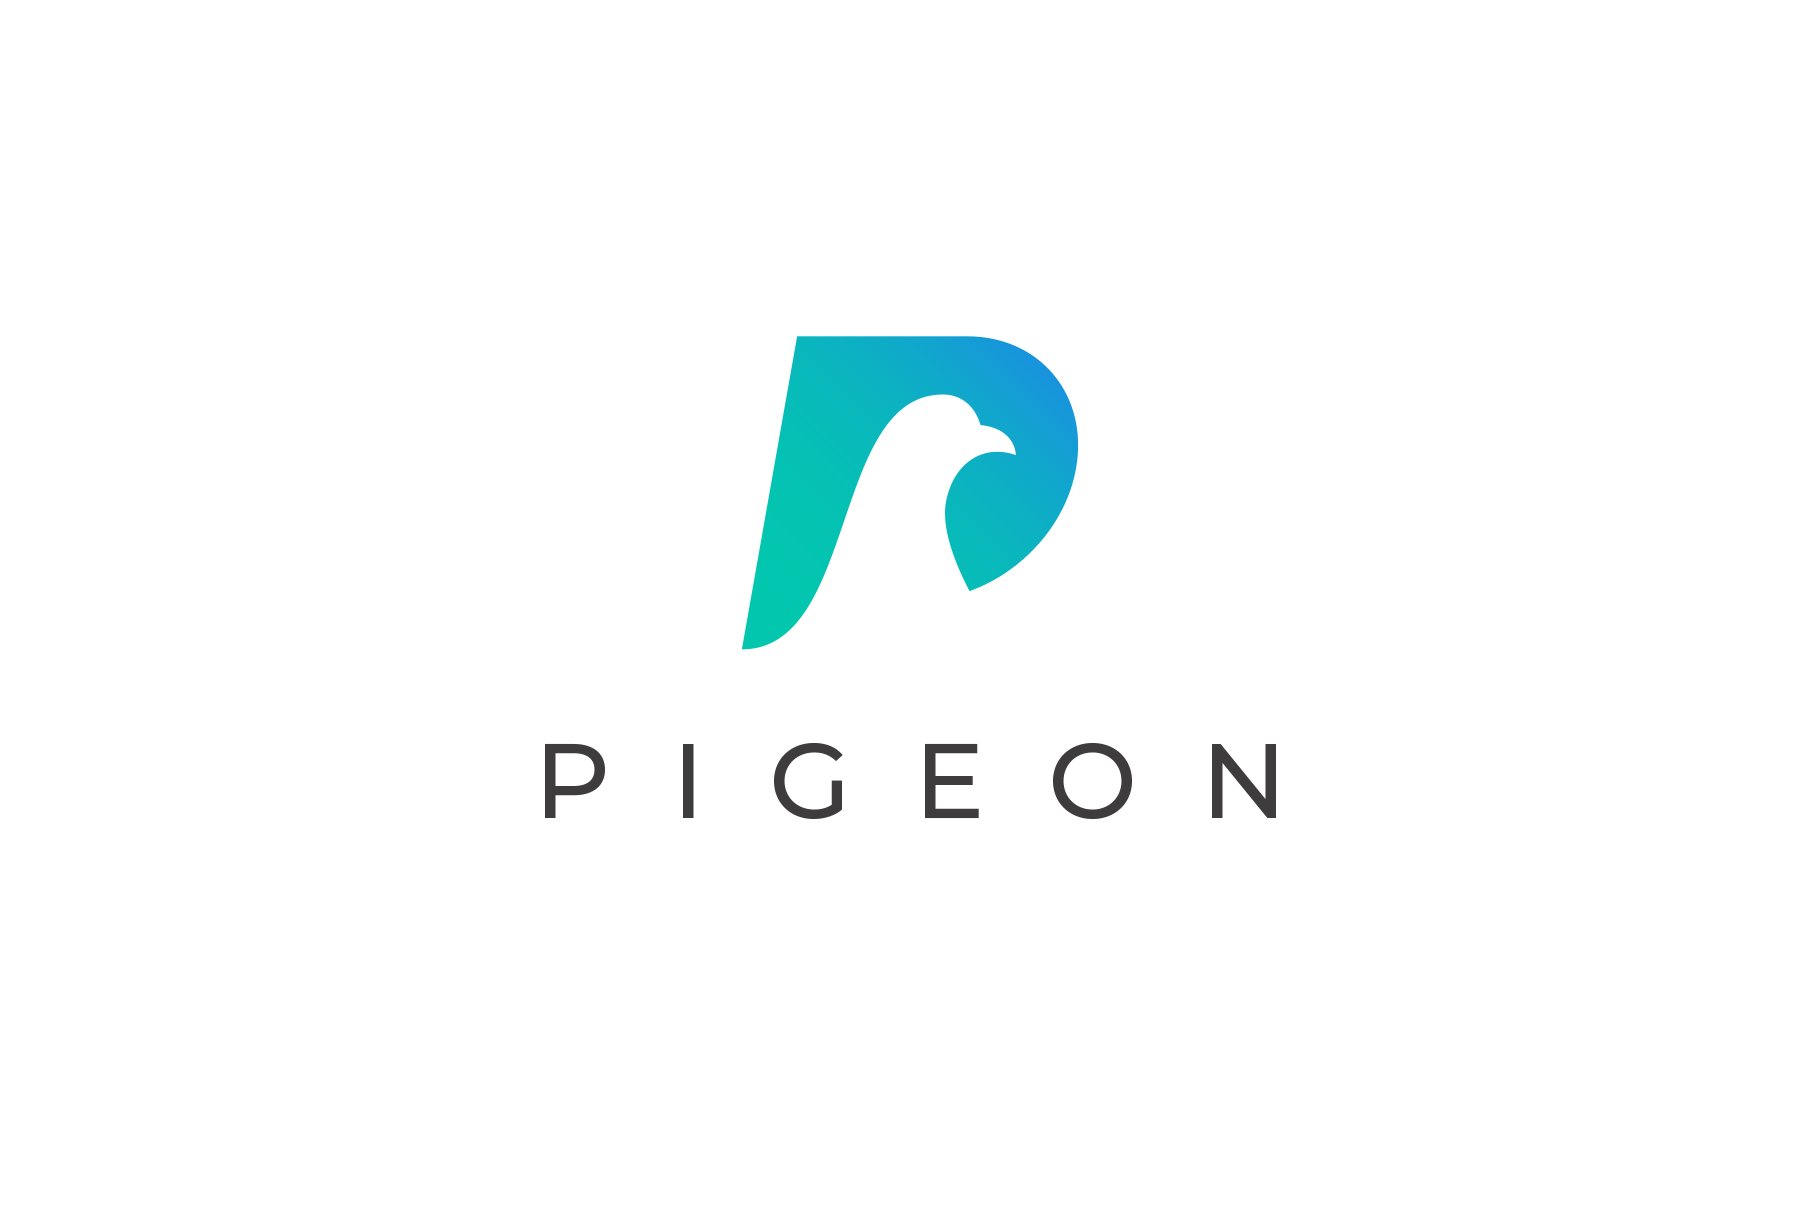 Pigeon Logo Design cover image.